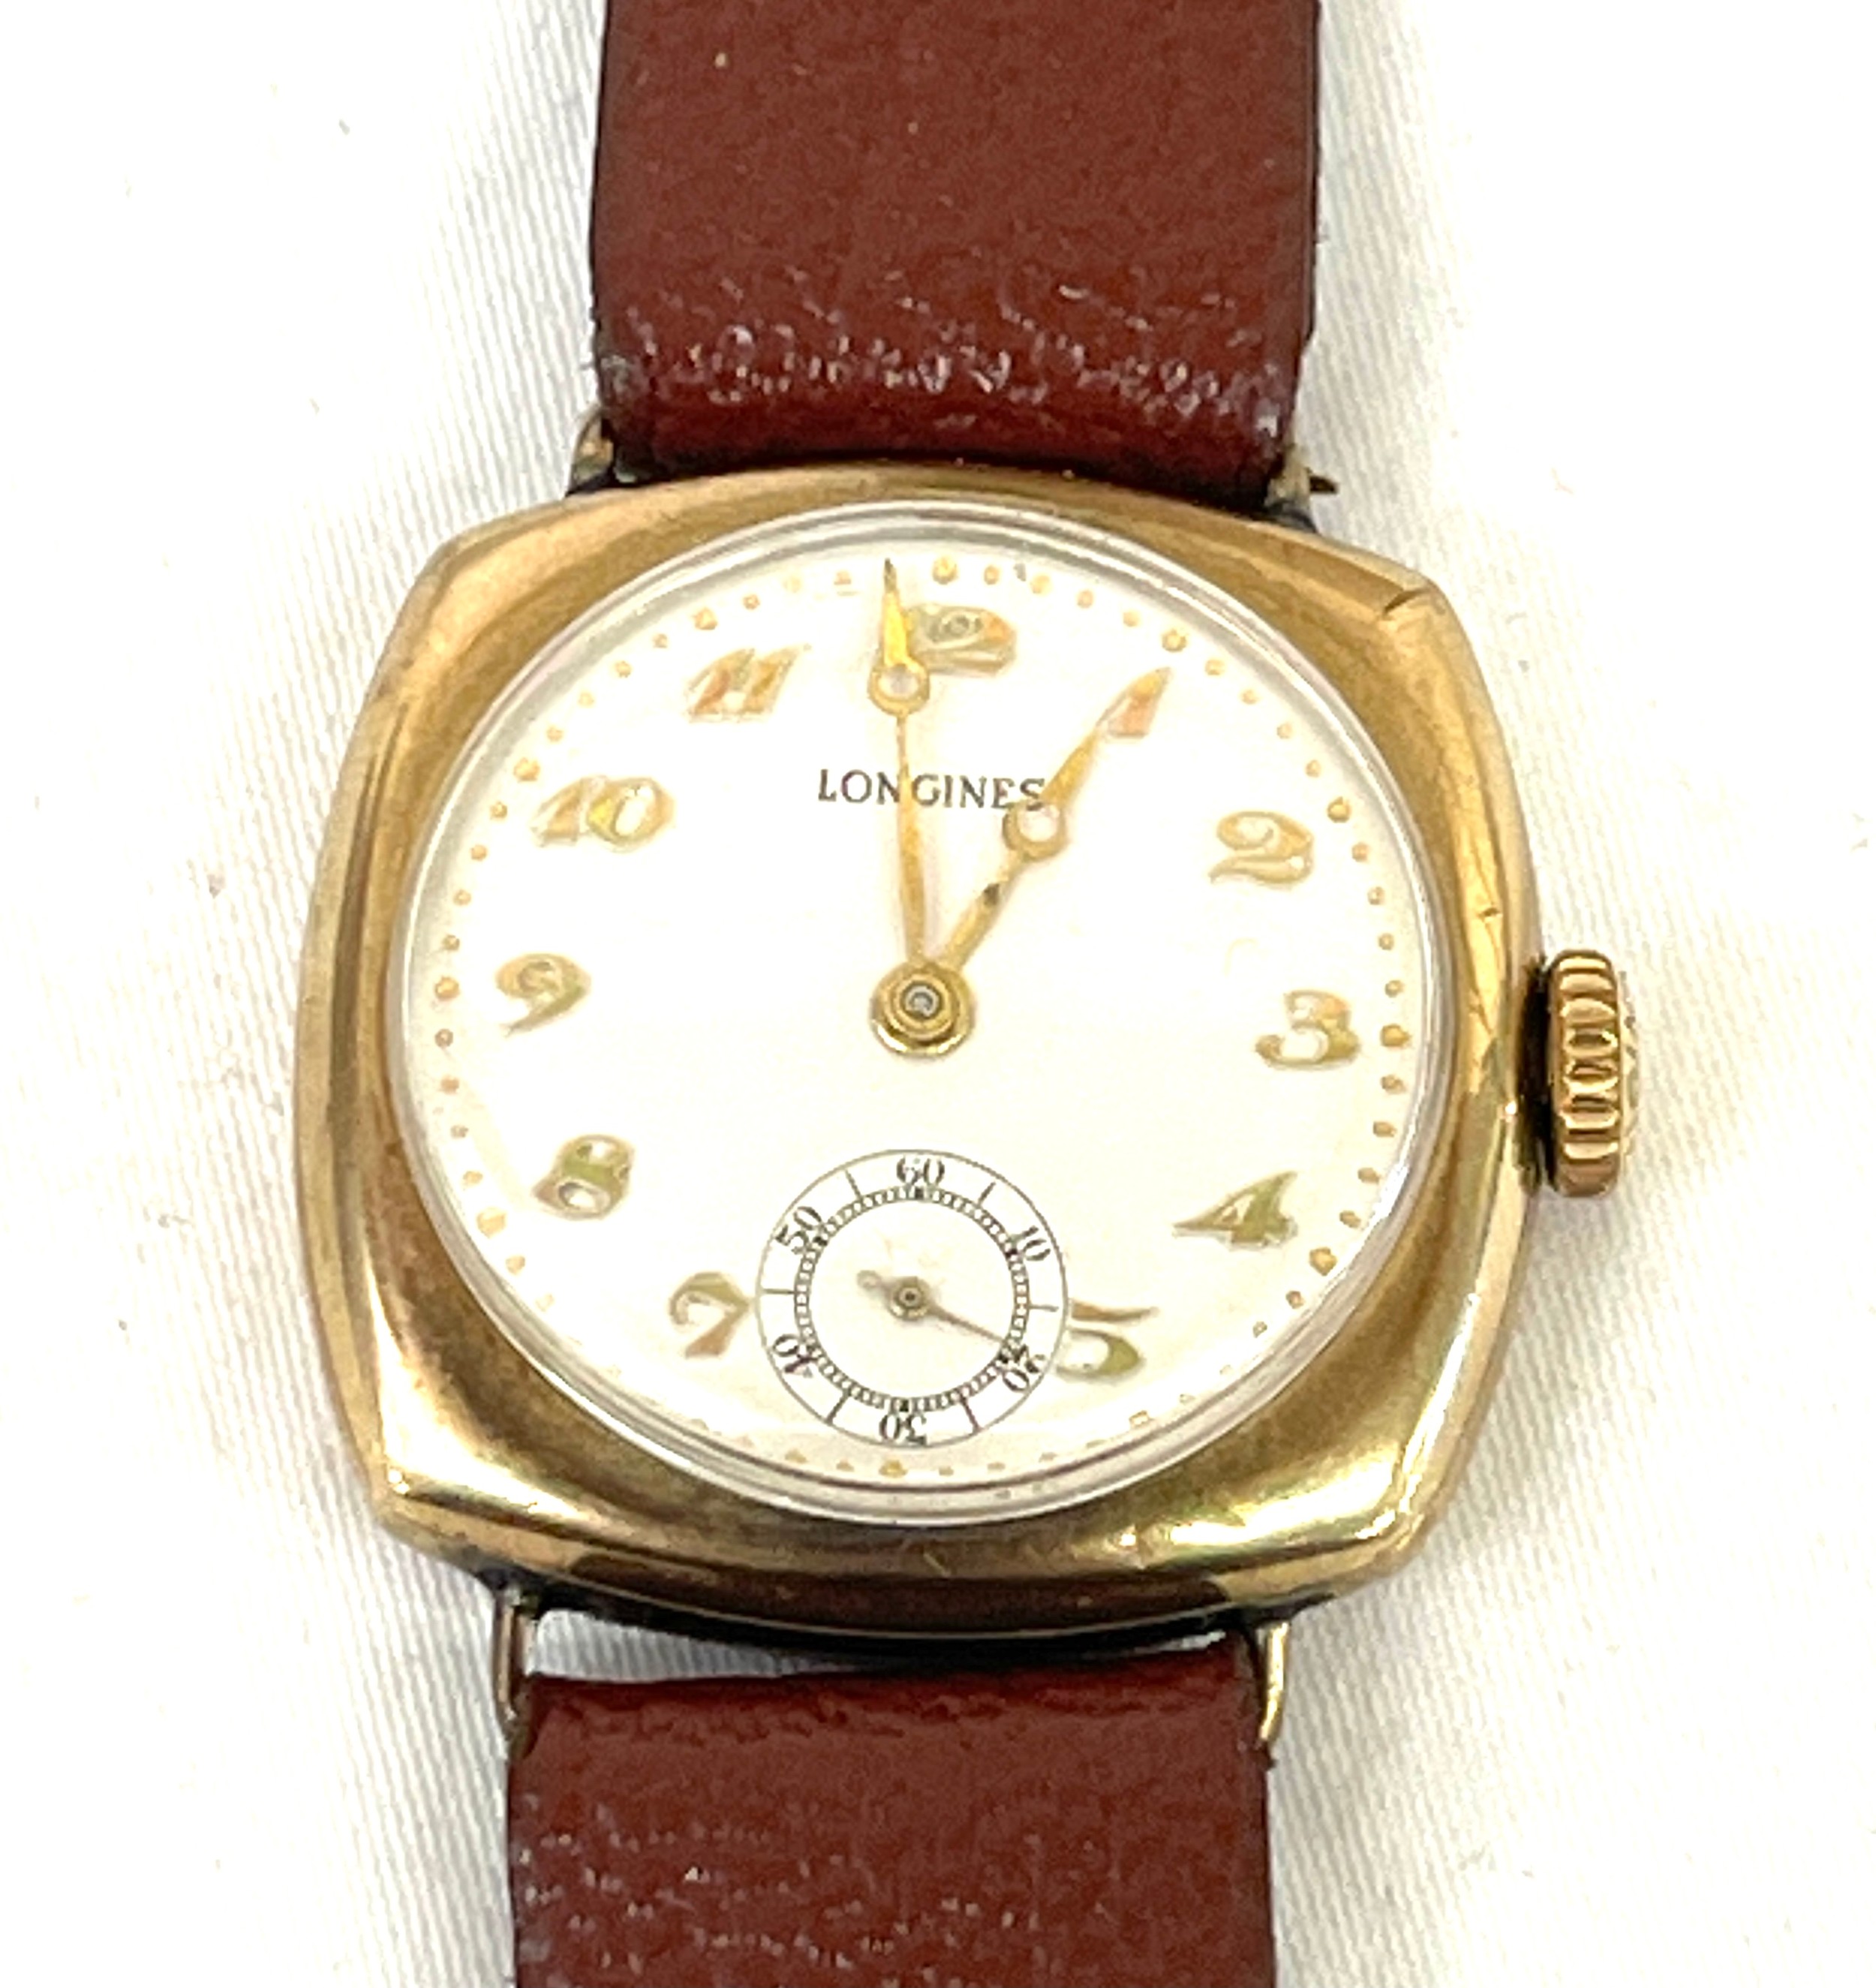 Gents hallmarked 9ct gold Longines wristwatch, leather strap, watch untested